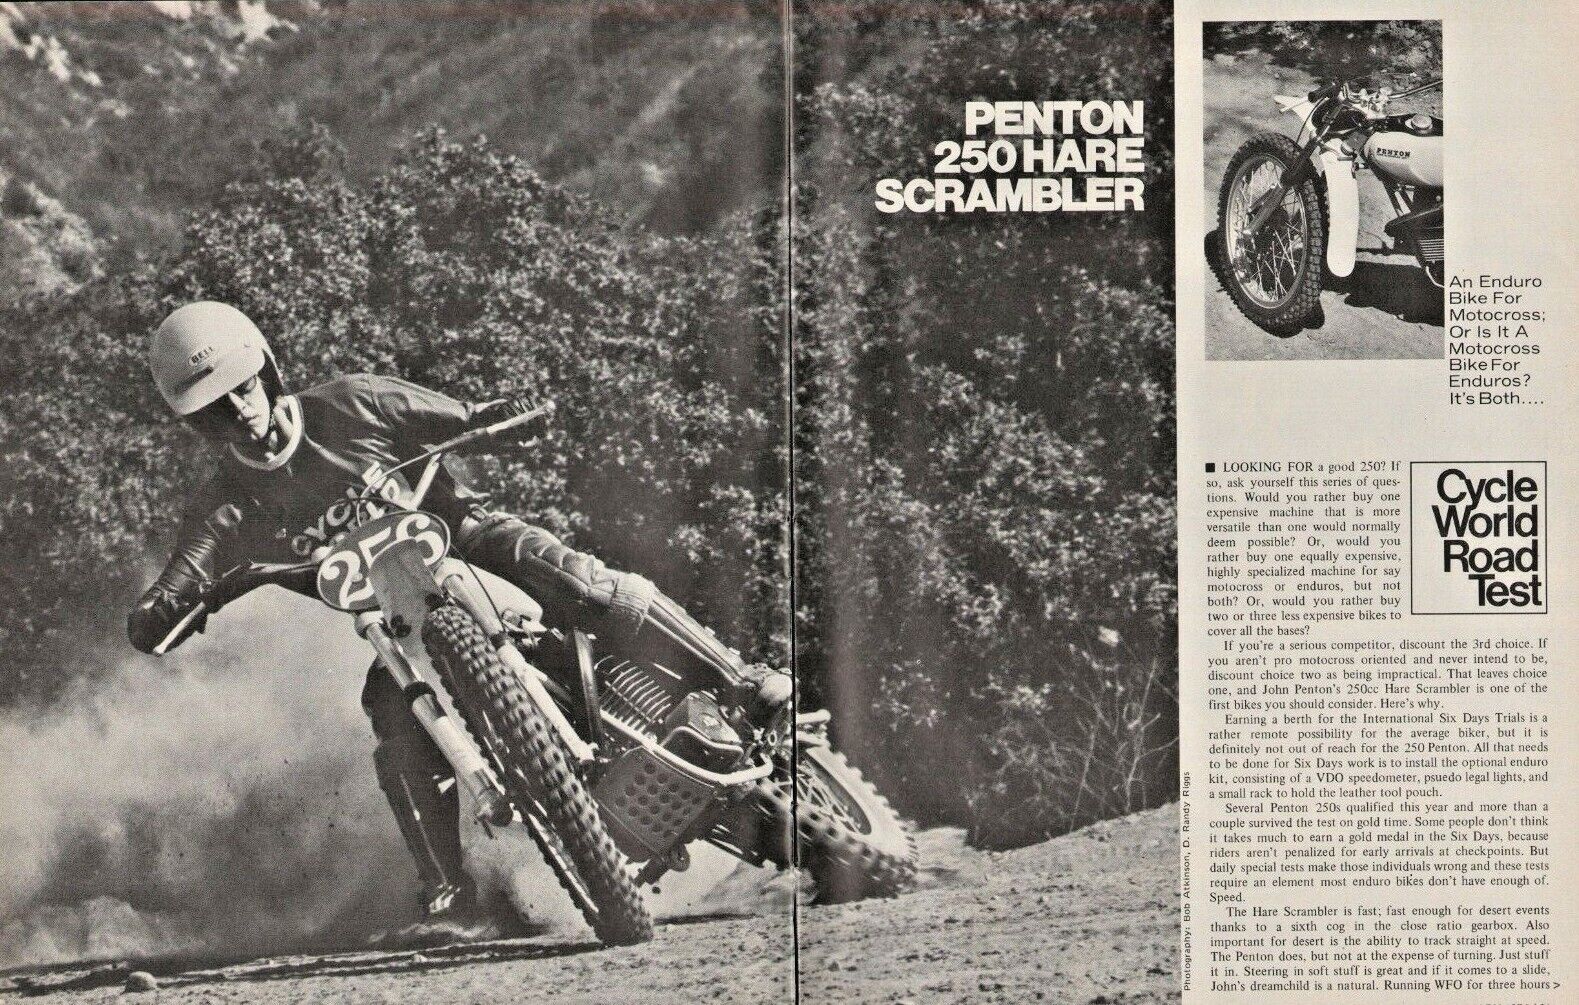 1974 Penton 250 Hare Scrambler - 5-page Vintage Motorcycle Road Test Article